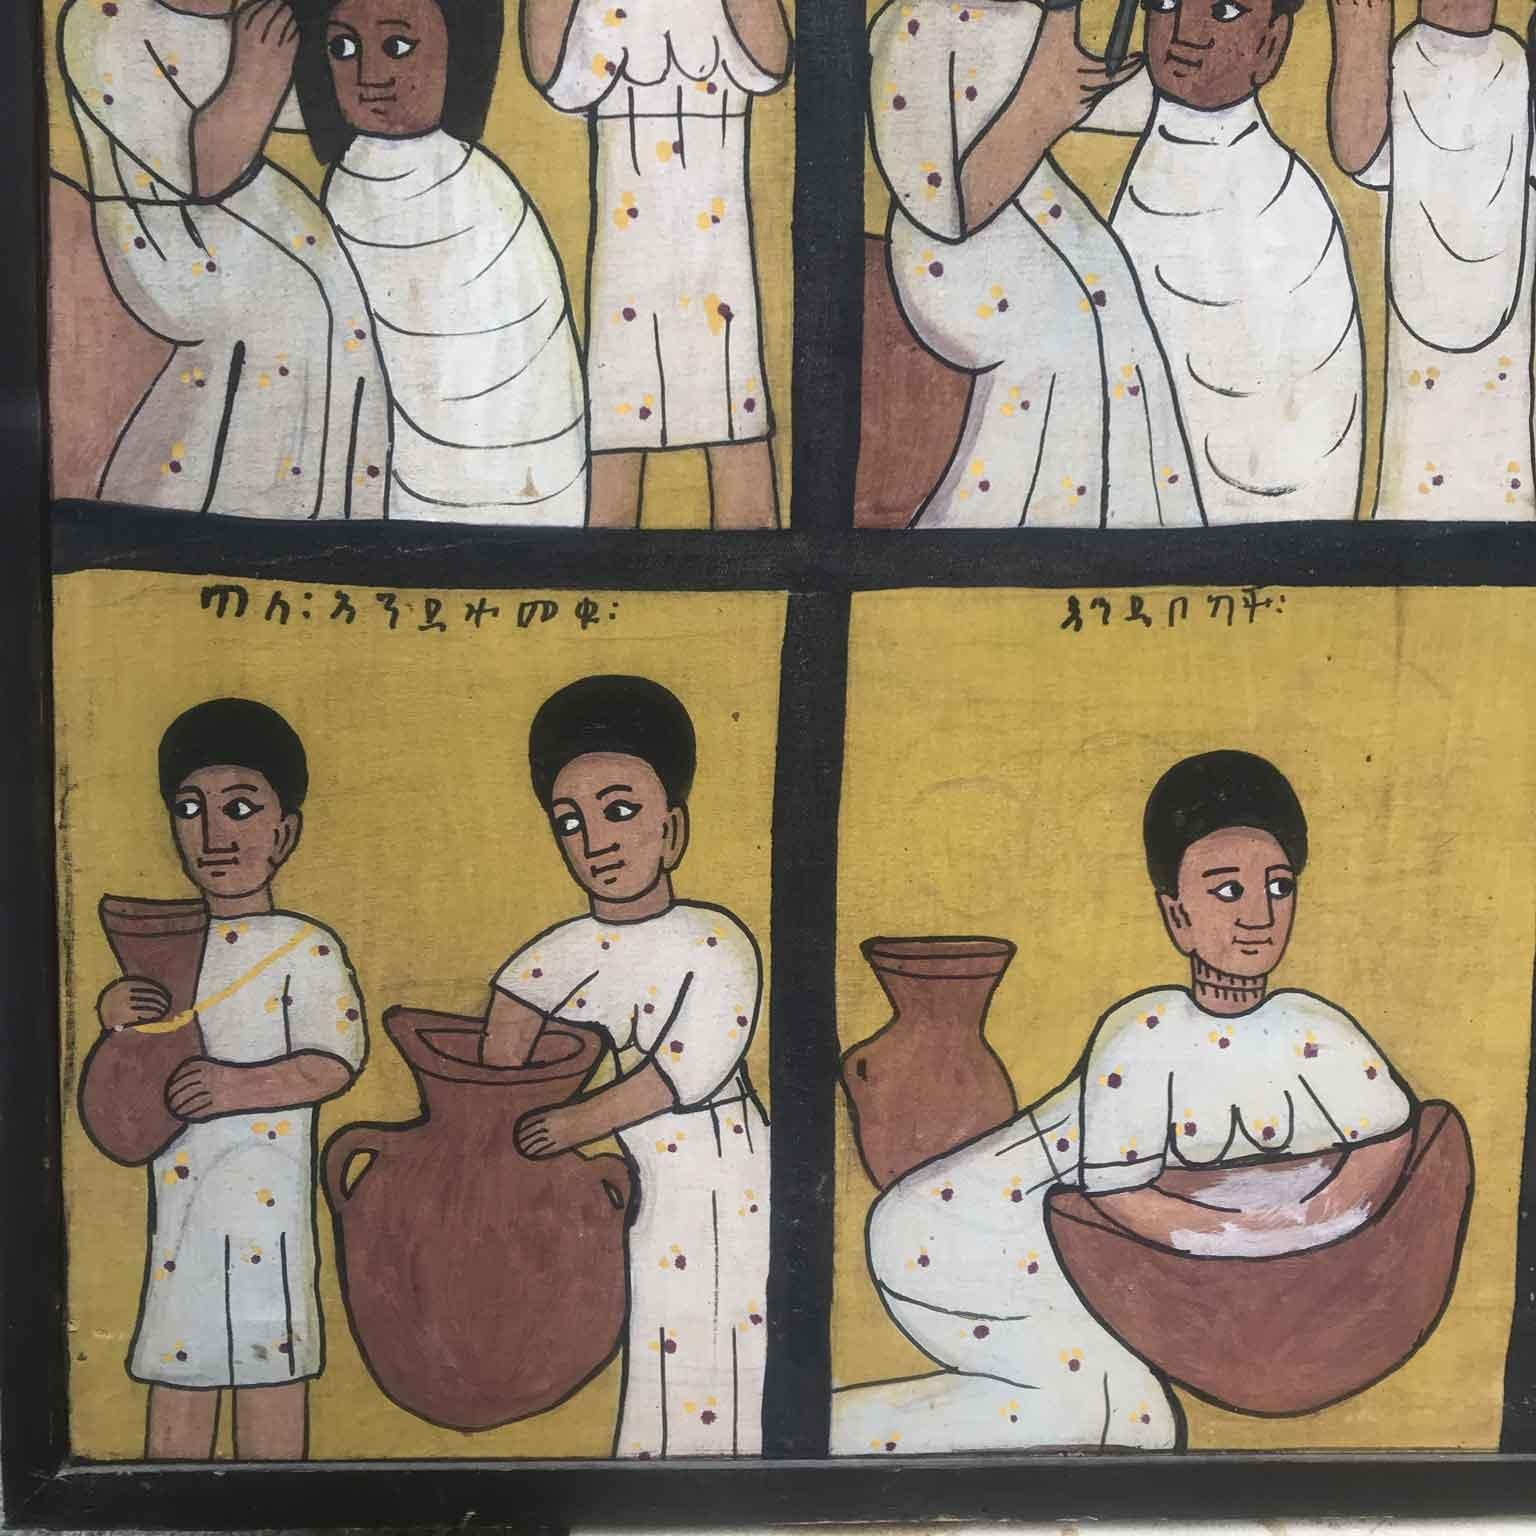 ancient ethiopian art